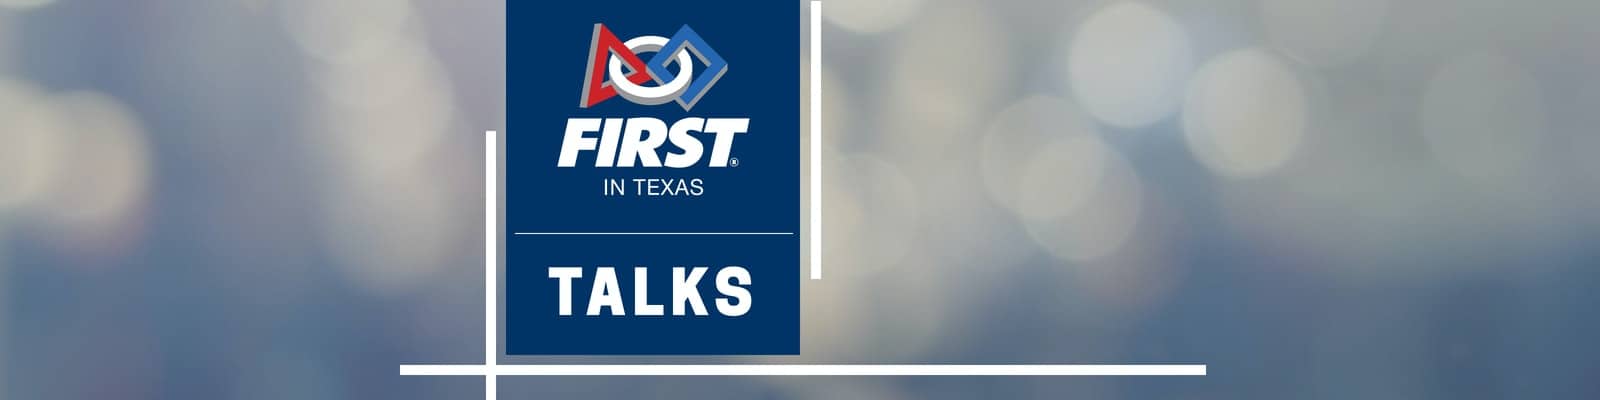 FIRST in Texas Talks logo